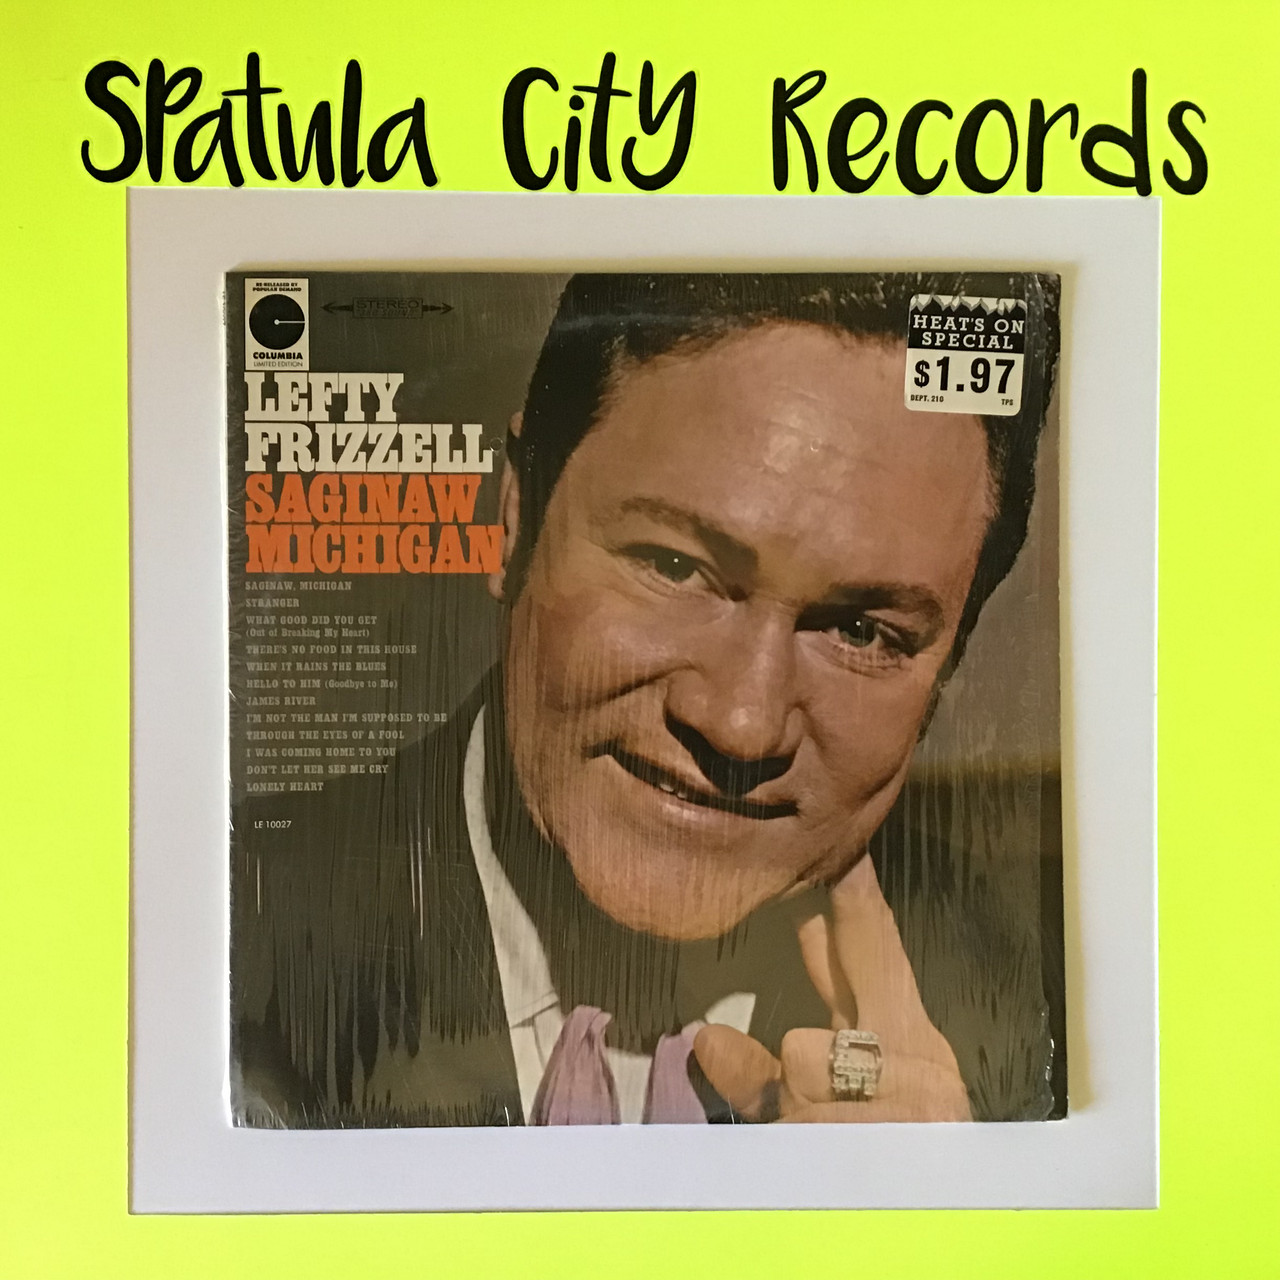 Lefty Frizzell - Saginaw Michigan - vinyl record album LP